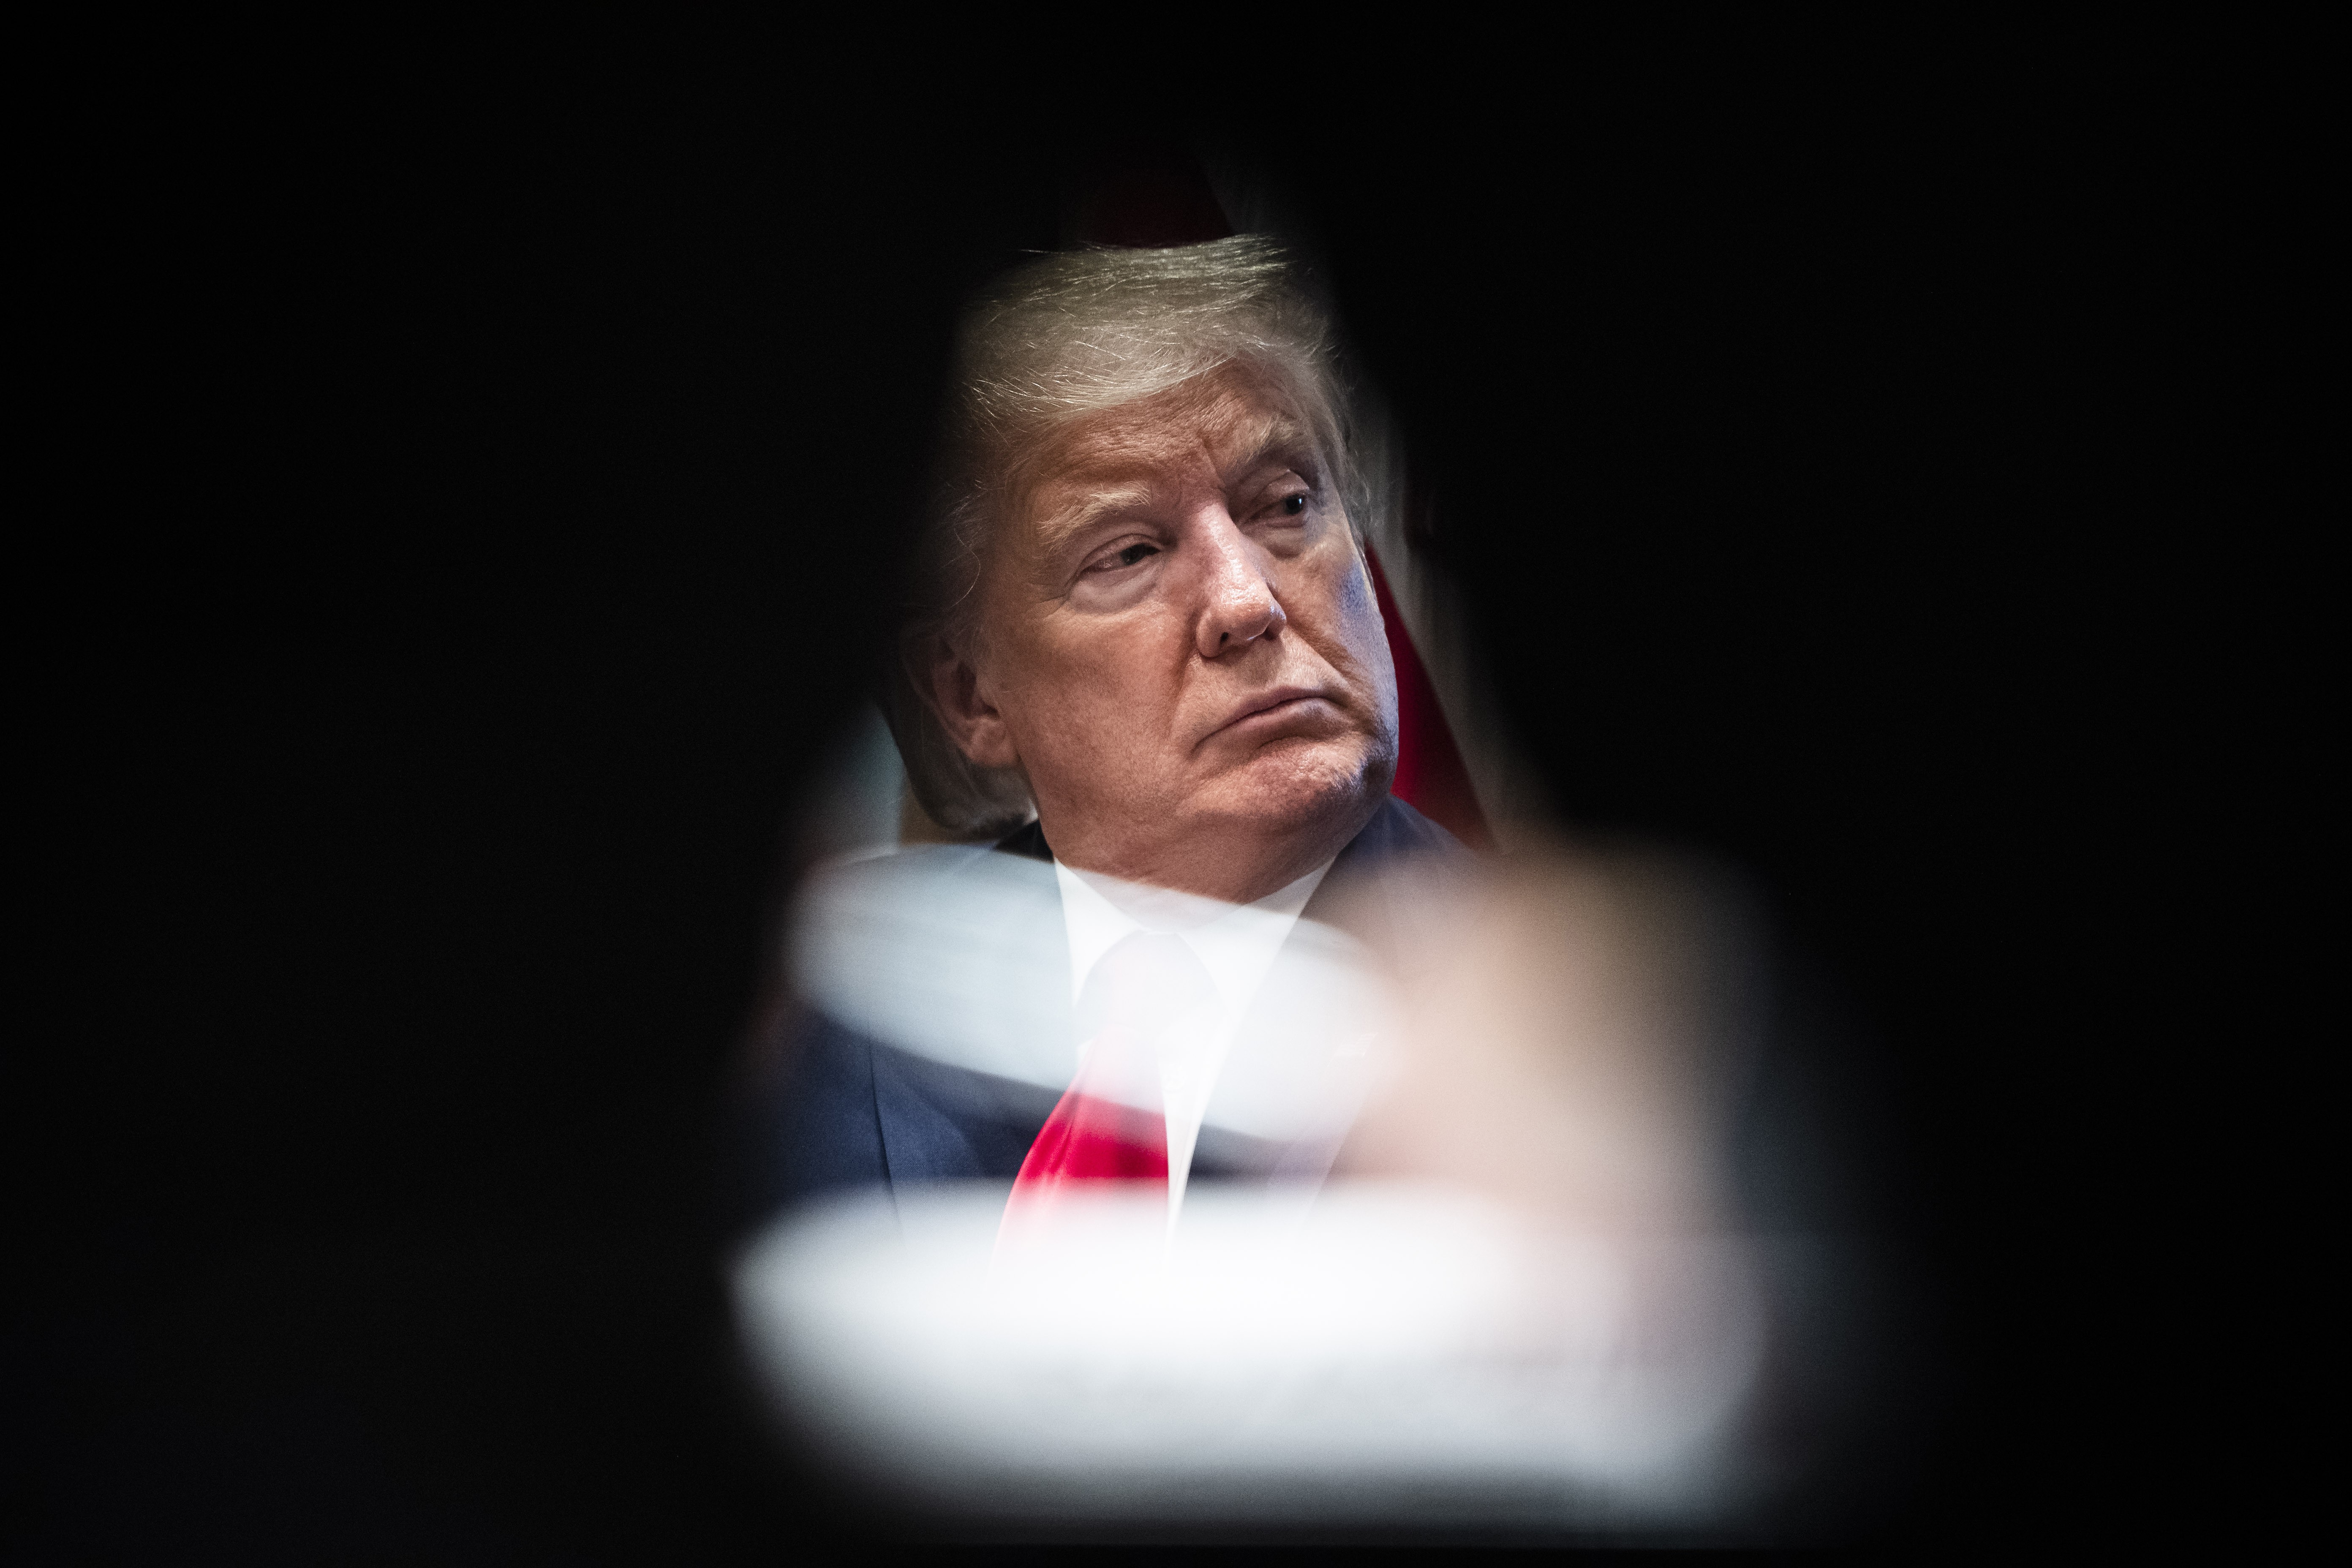 President Donald Trump on November 22. Photo: Washington Post photo by Jabin Botsford